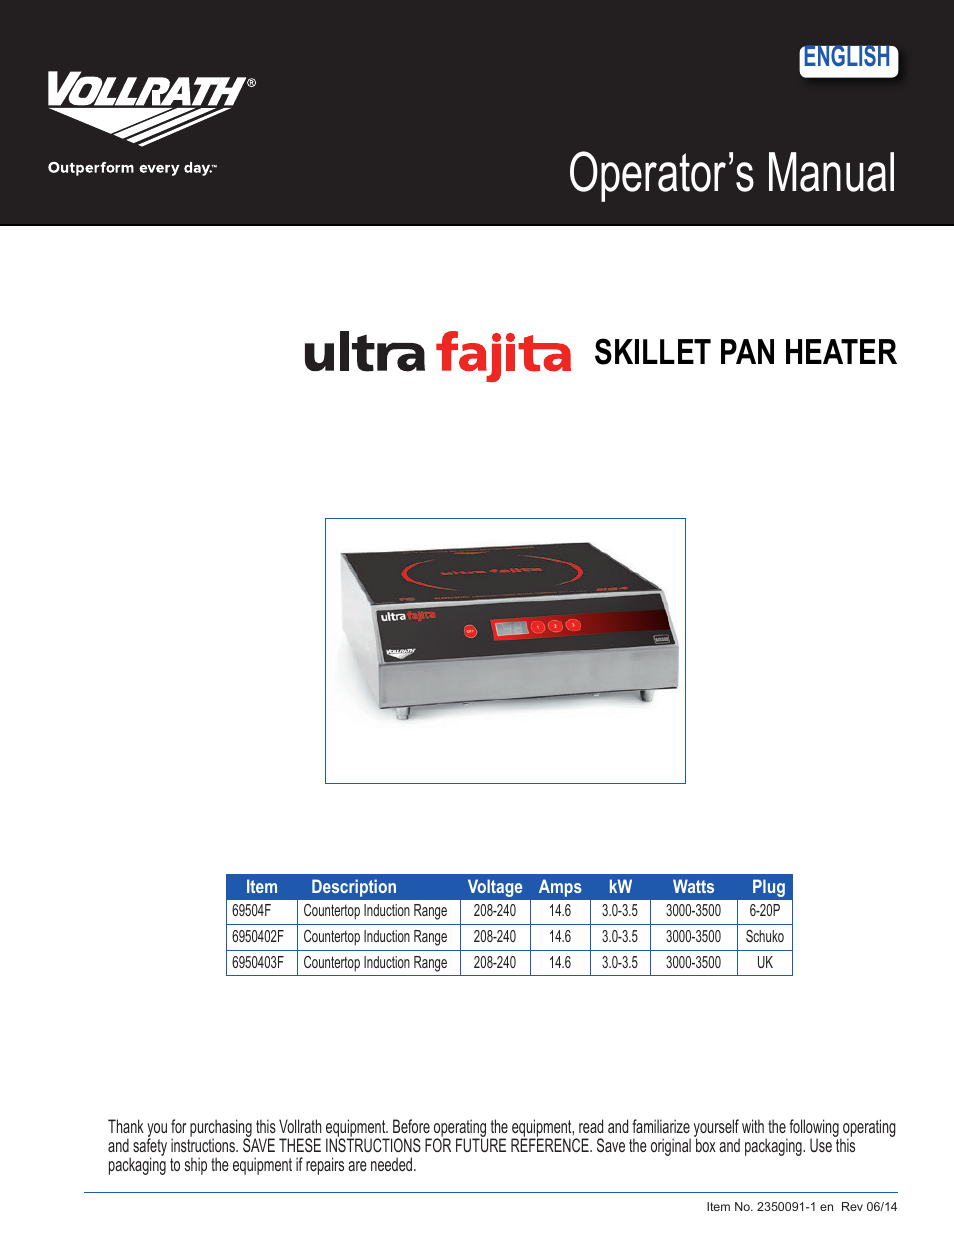 Ultra Series 3500 Watt Fajita Heater Induction Ranges